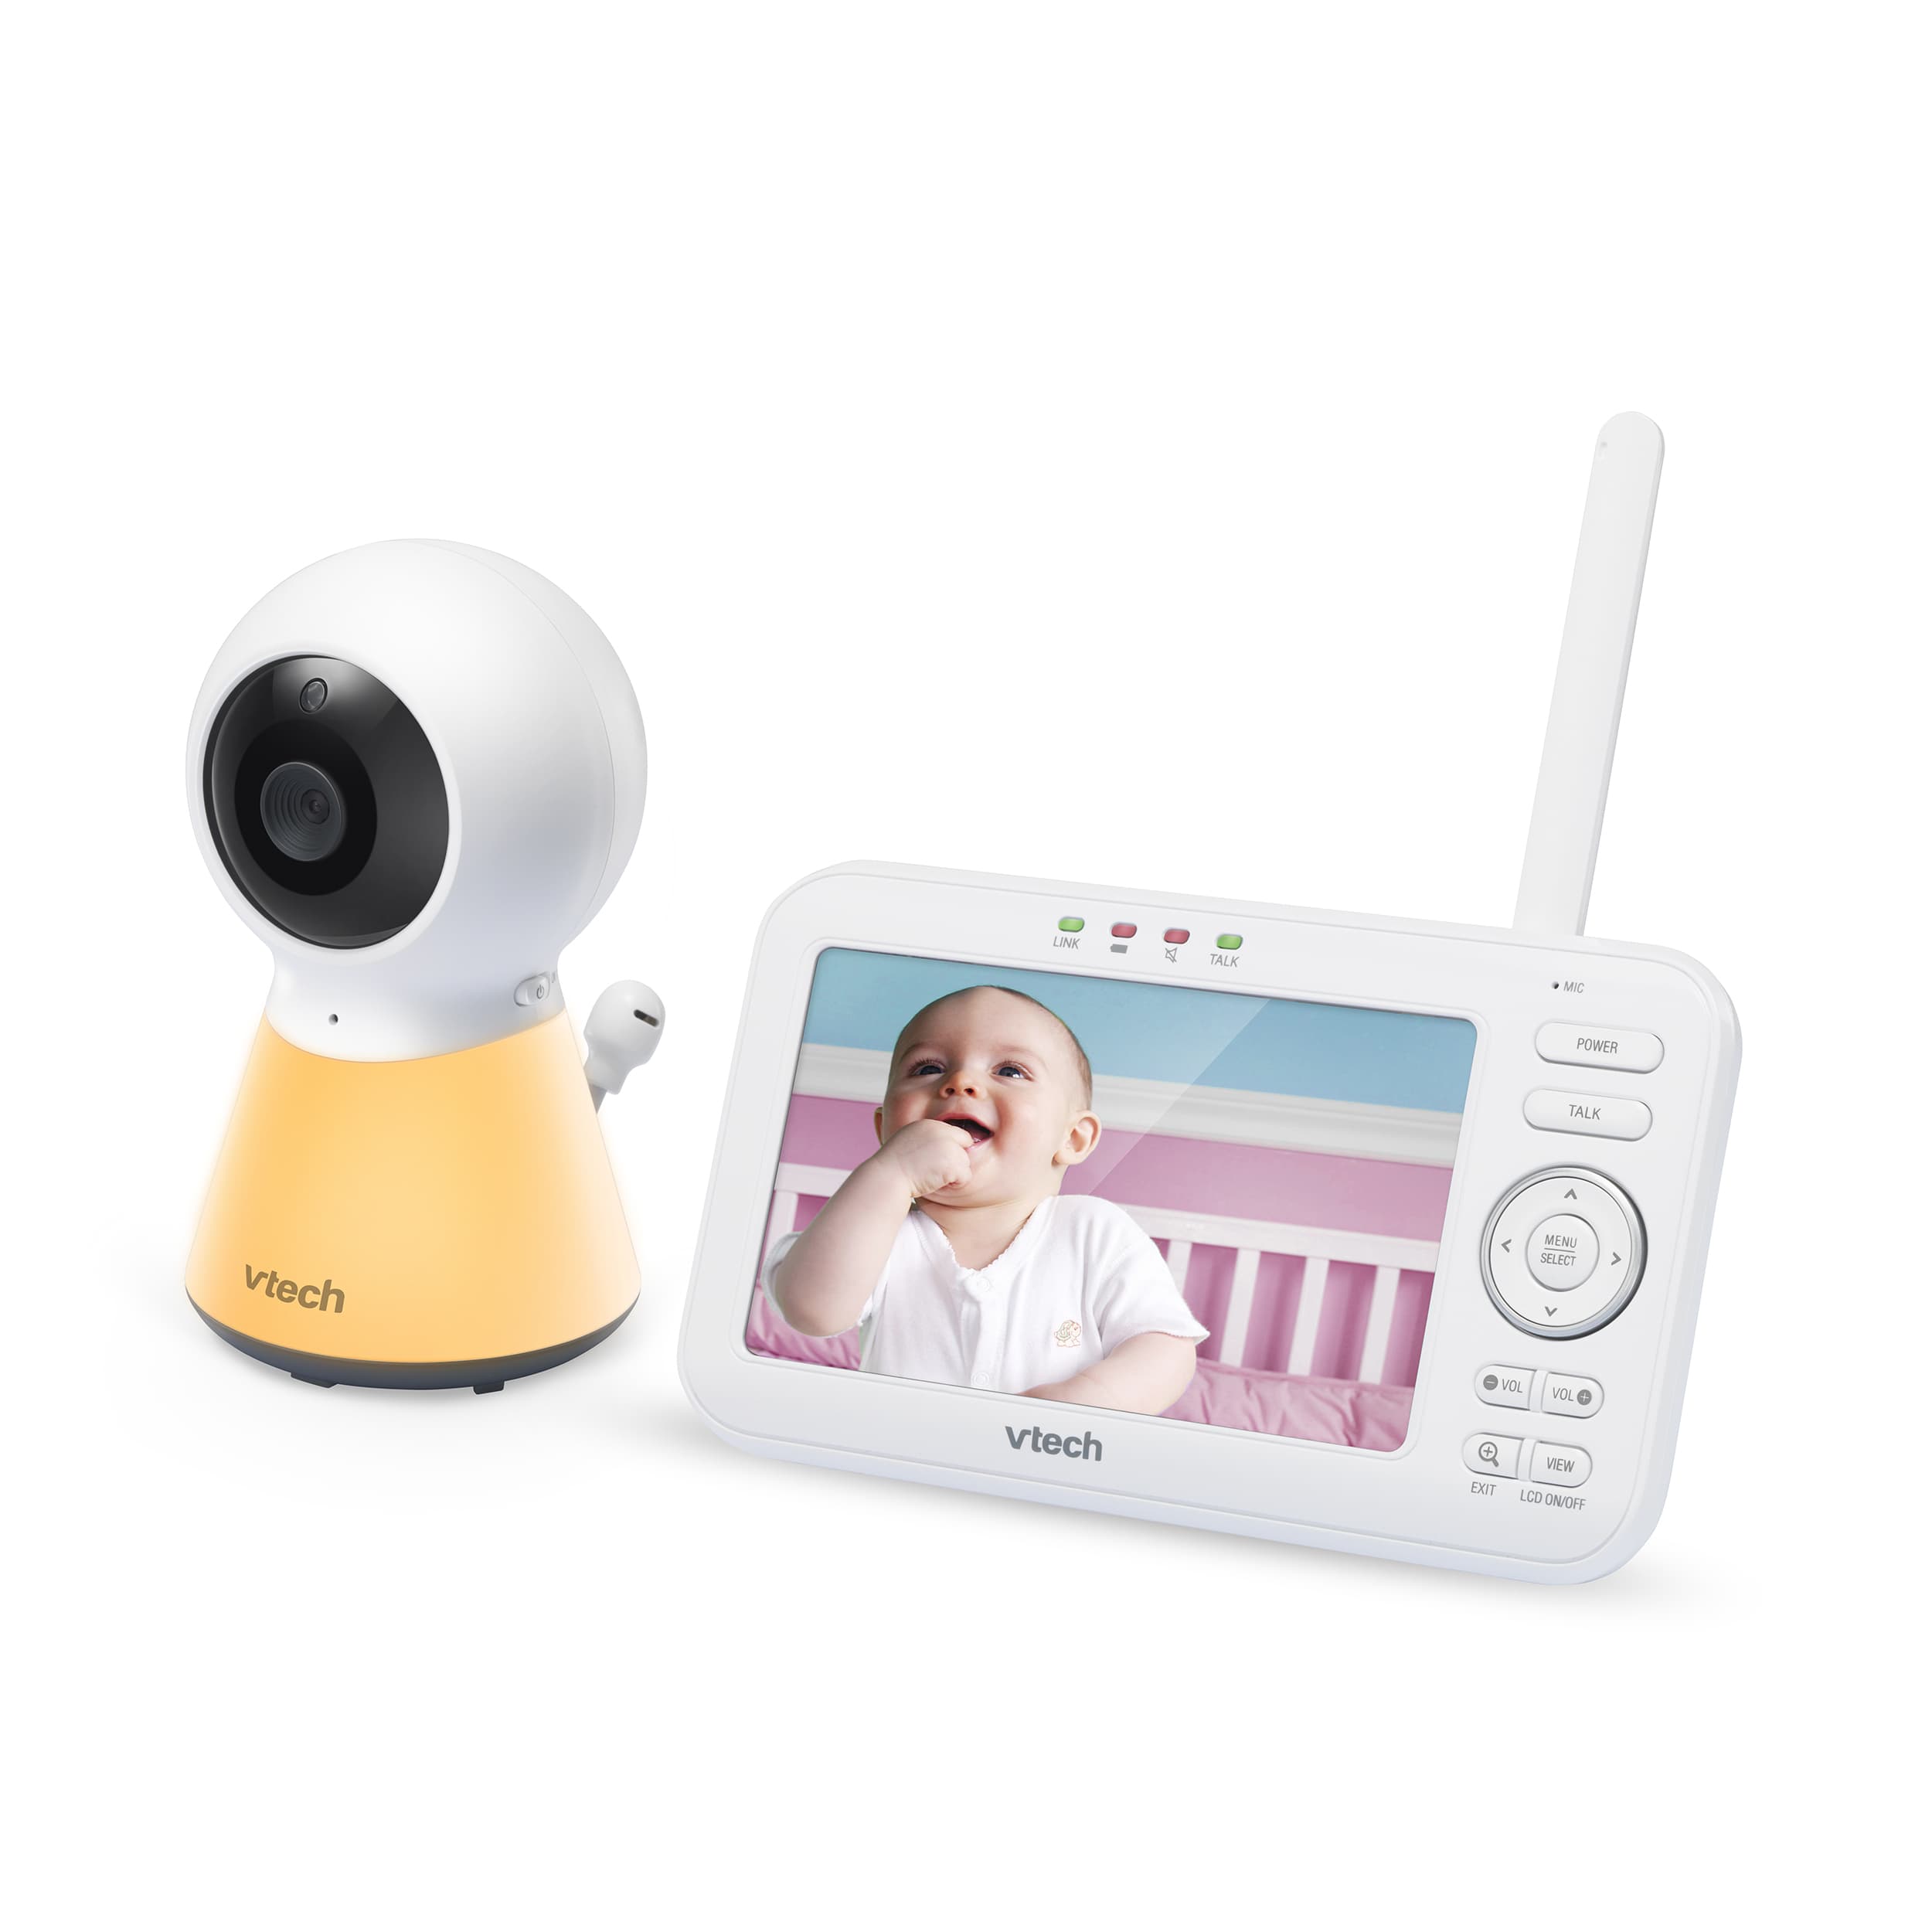 VTech VM5254 Baby Monitor Review